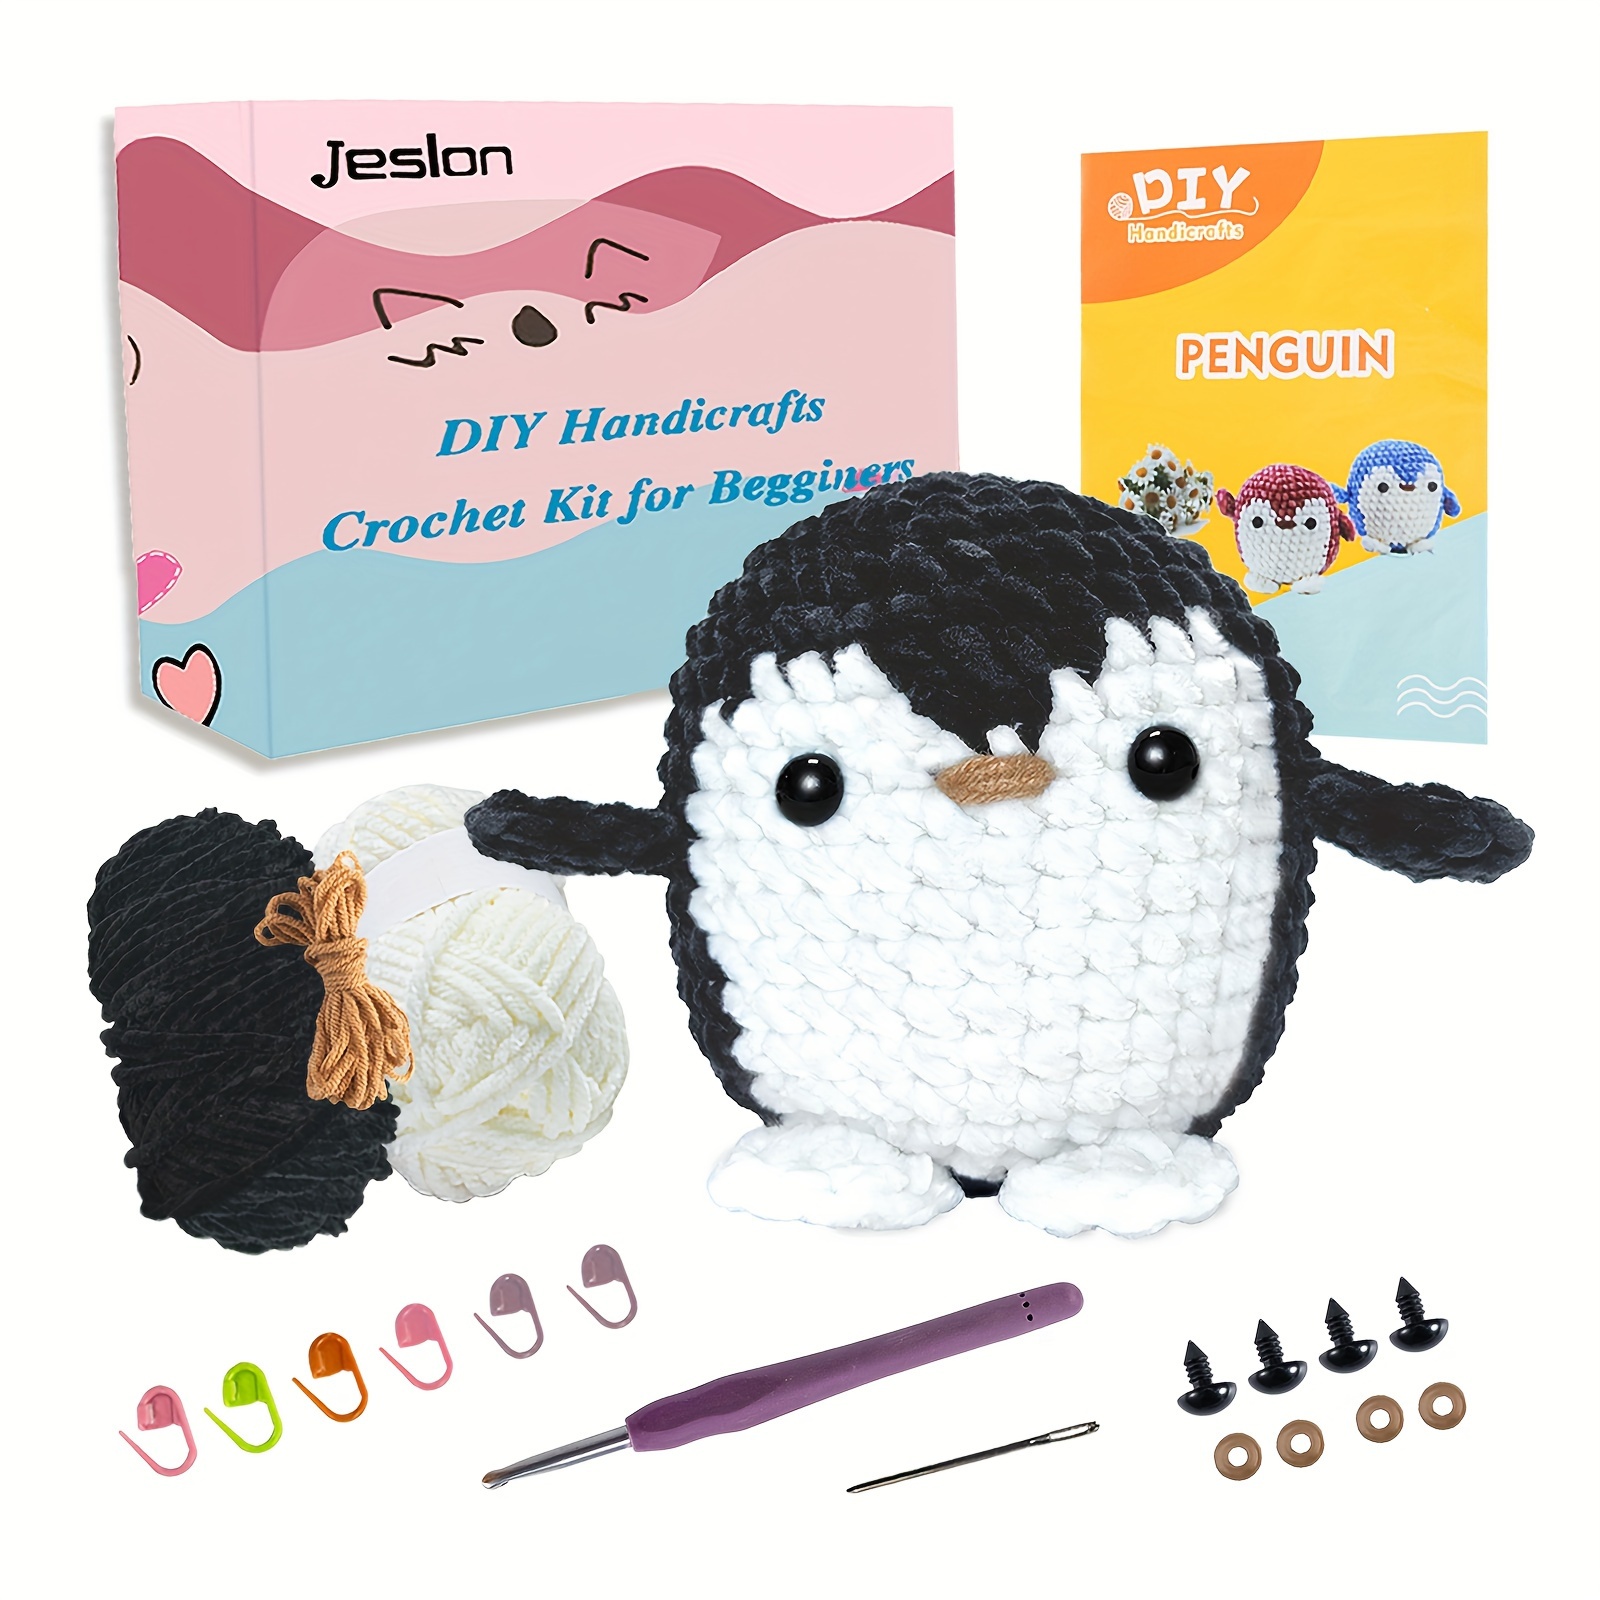 Beginners Crochet Kit with Easy Peasy Yarn, Crochet Kit for Complete  Beginners with Step-by-Step Video Tutorials, Pierre The Penguin